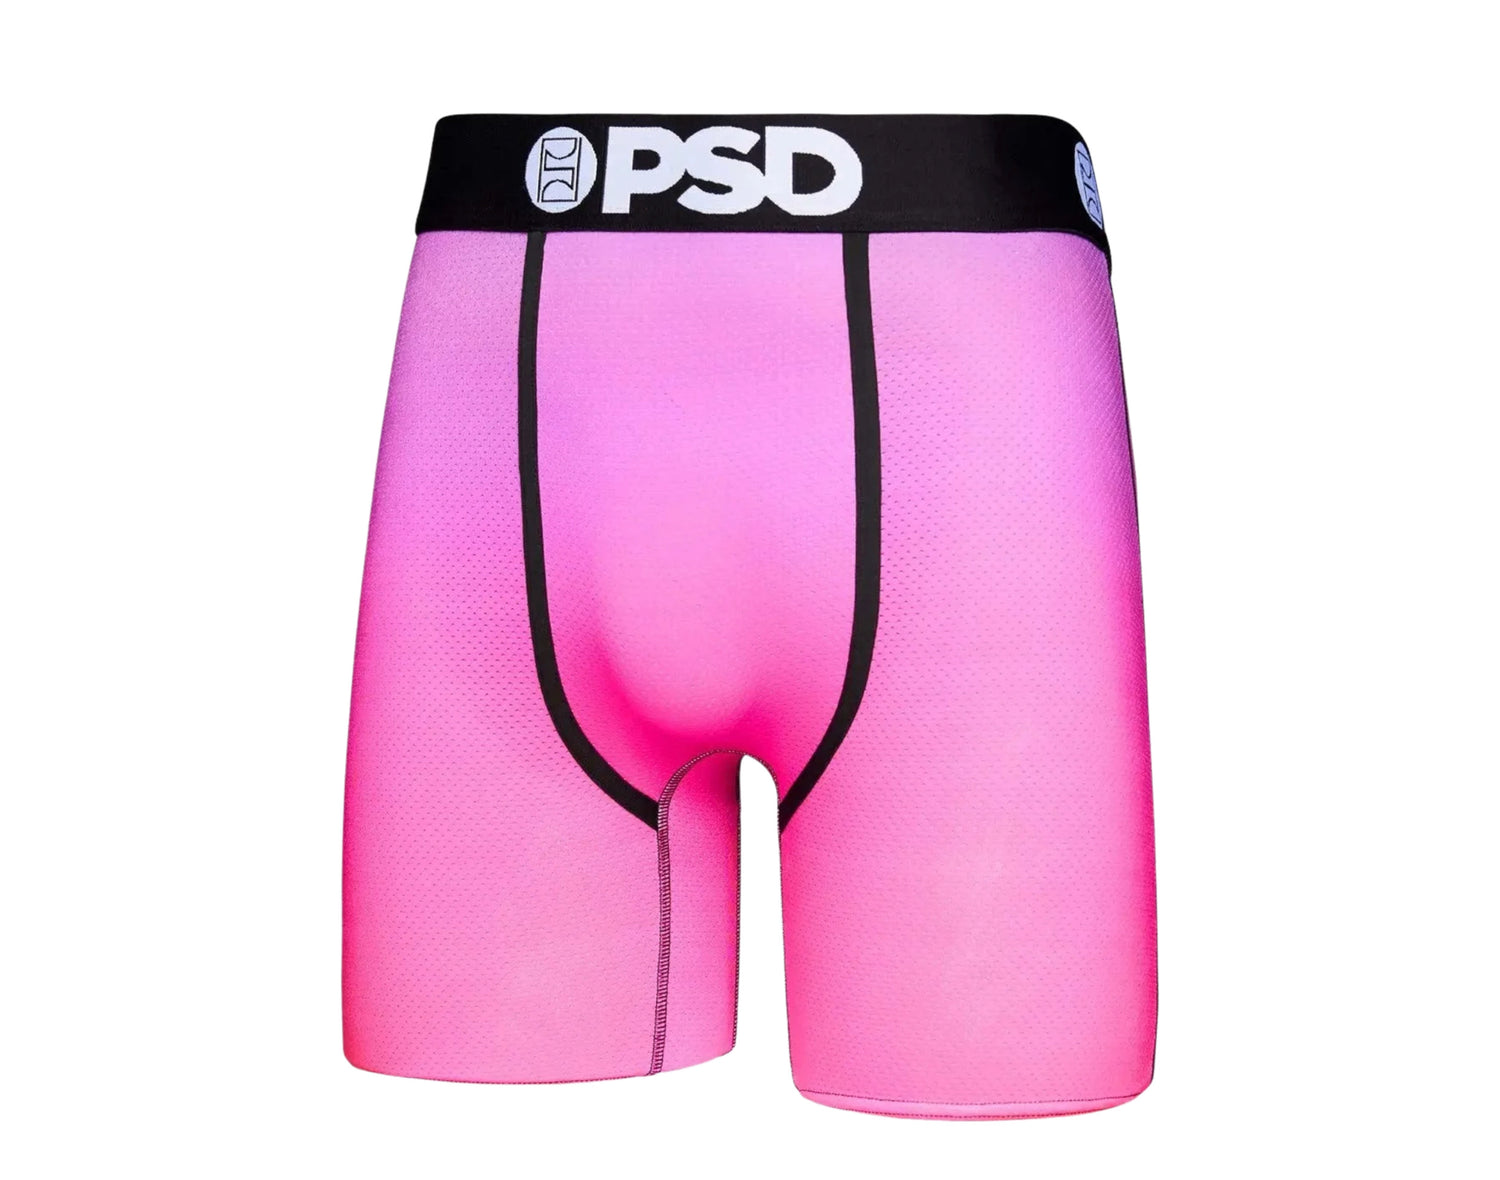 PSD Cool Mesh 3-Pack - Gradient Boxer Briefs Men's Underwear